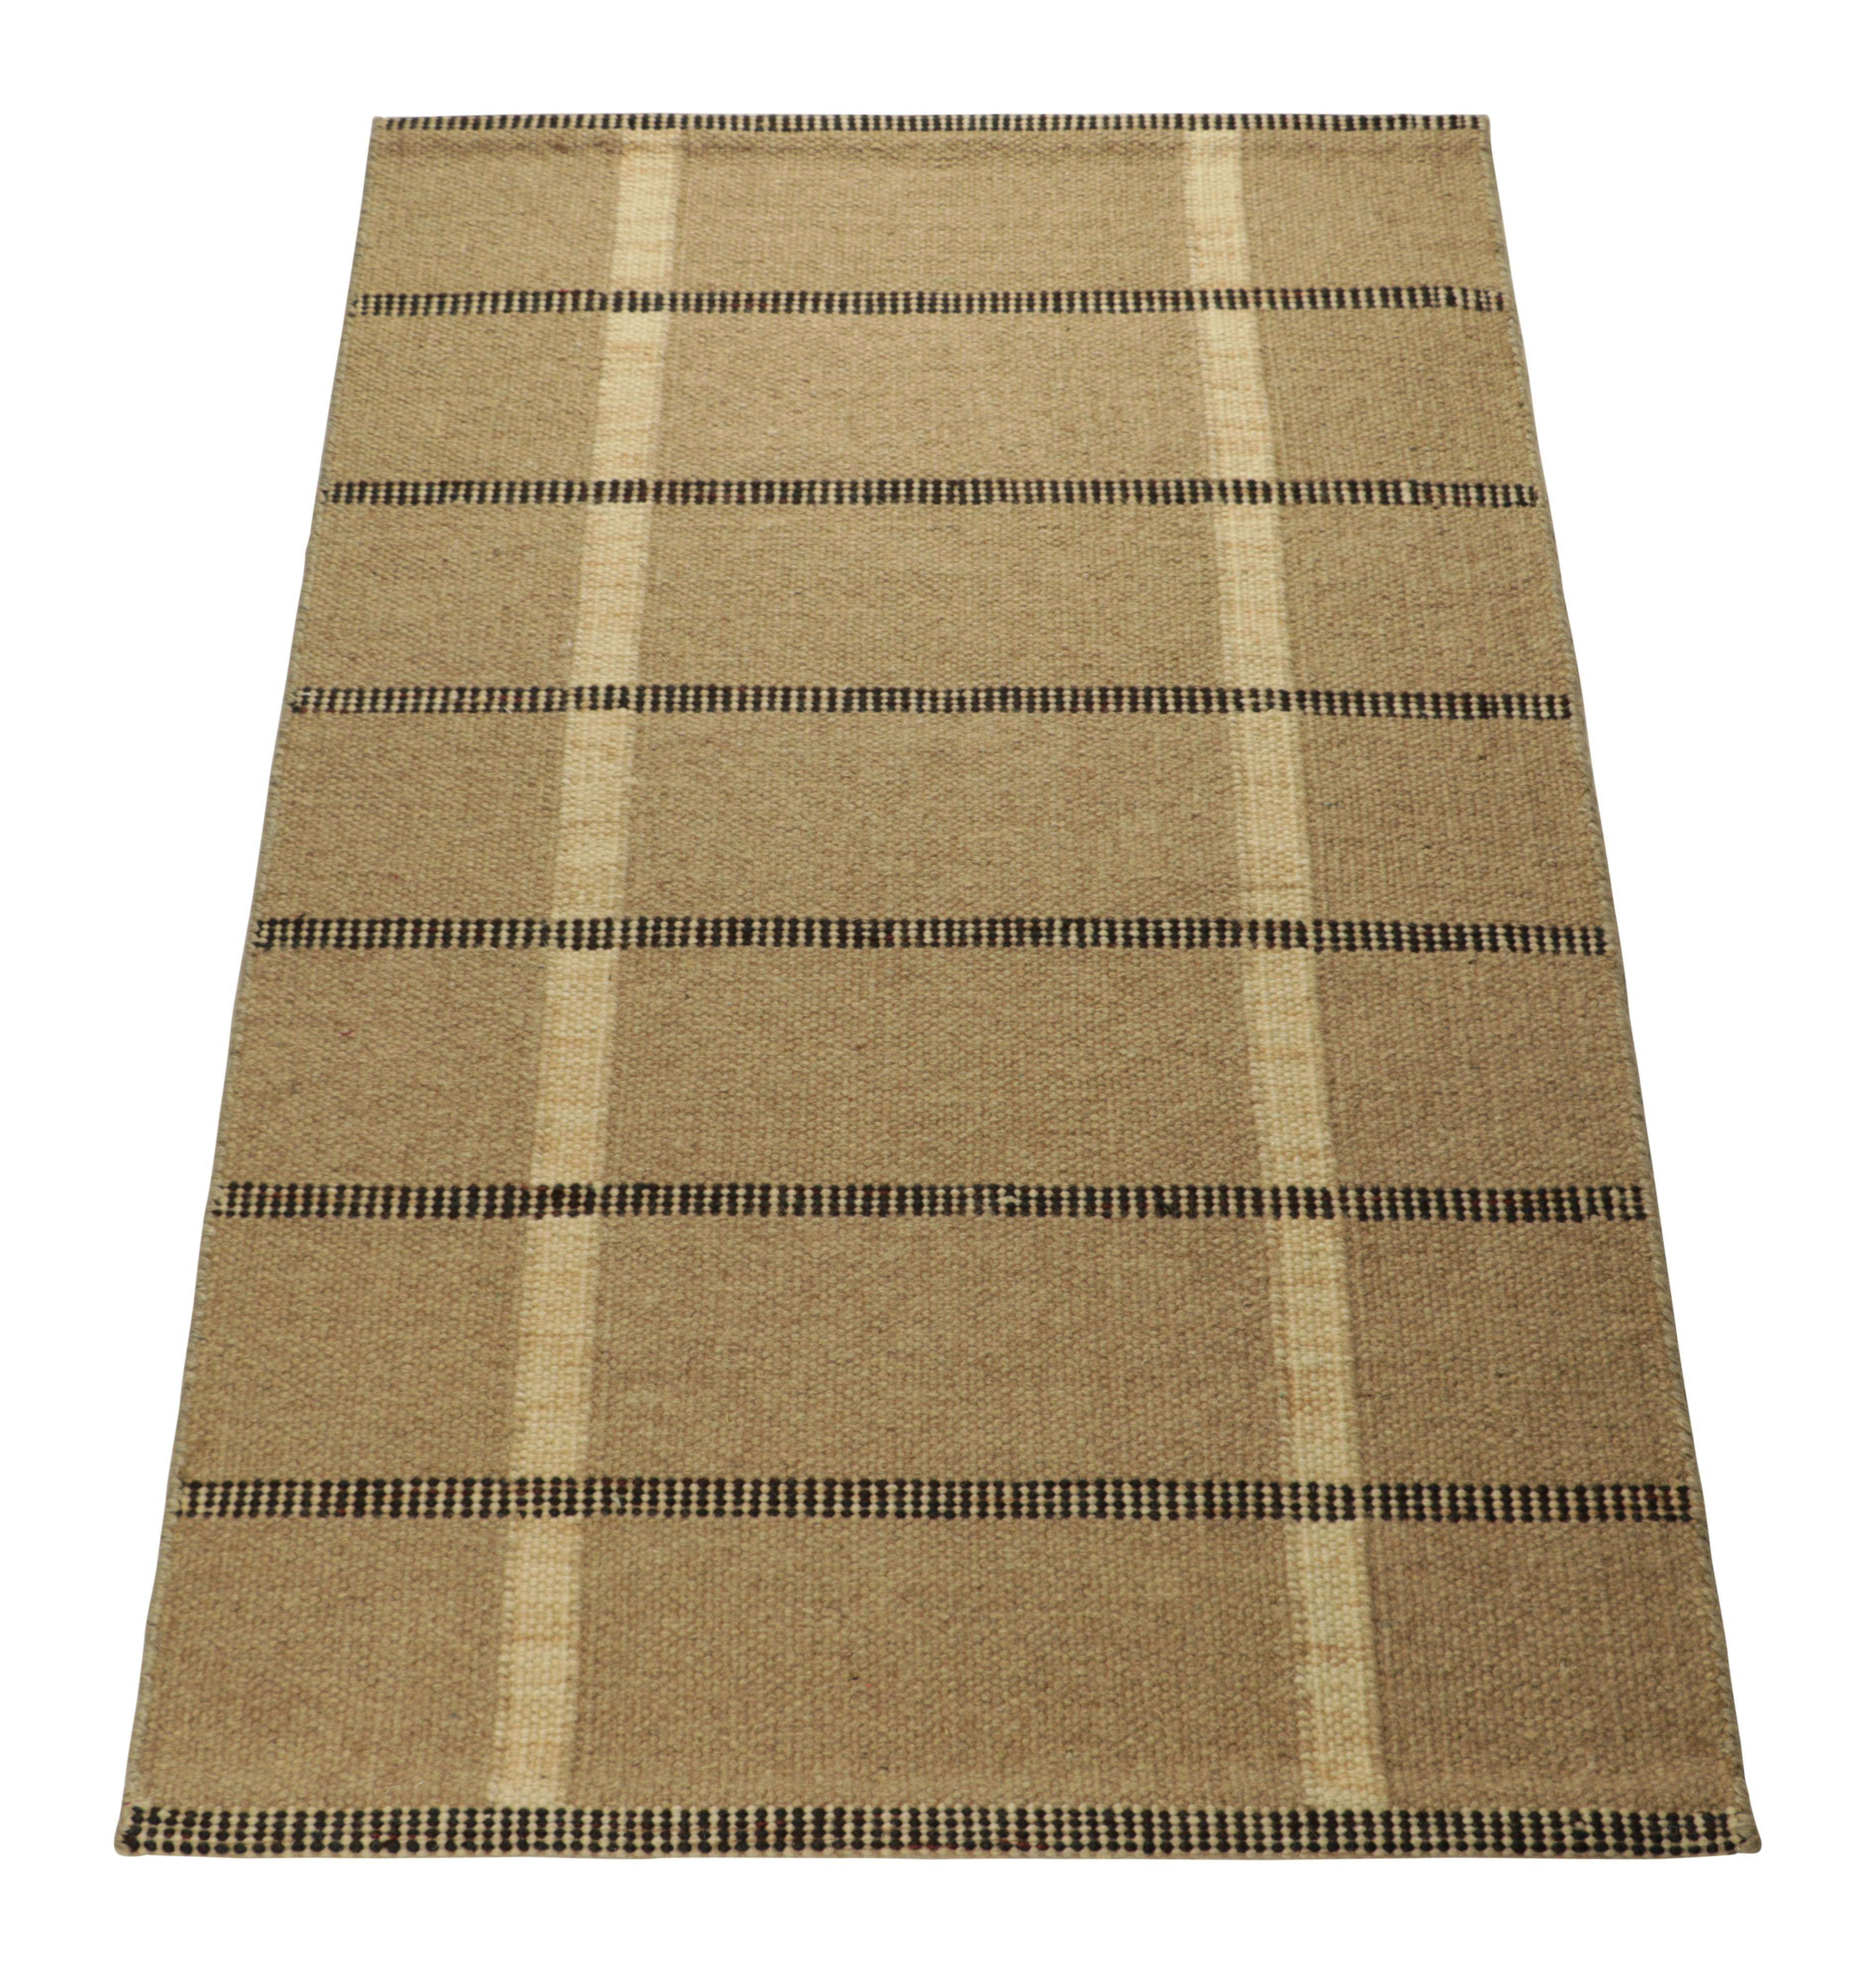 Indien Rug & Kilim's Scandinavian Style Custom Rug in Beige-Brown, with Stripes (tapis sur mesure de style scandinave en beige et brun, avec des rayures) en vente